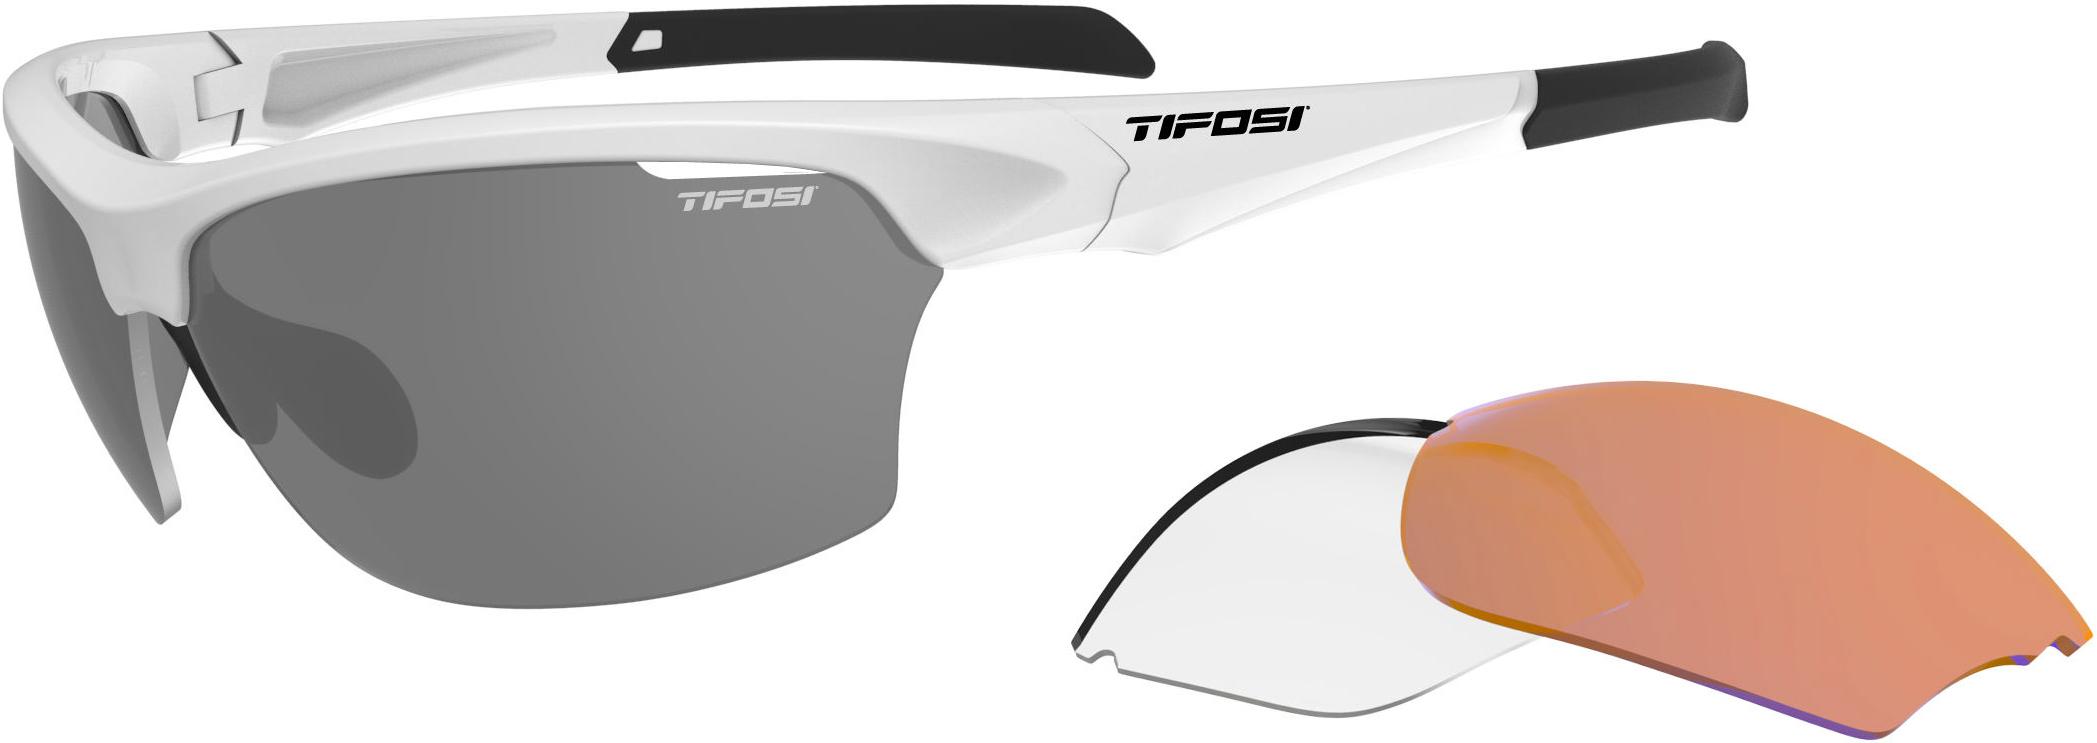 Tifosi Eyewear Intense Interchangeable Lens Sunglasses  White